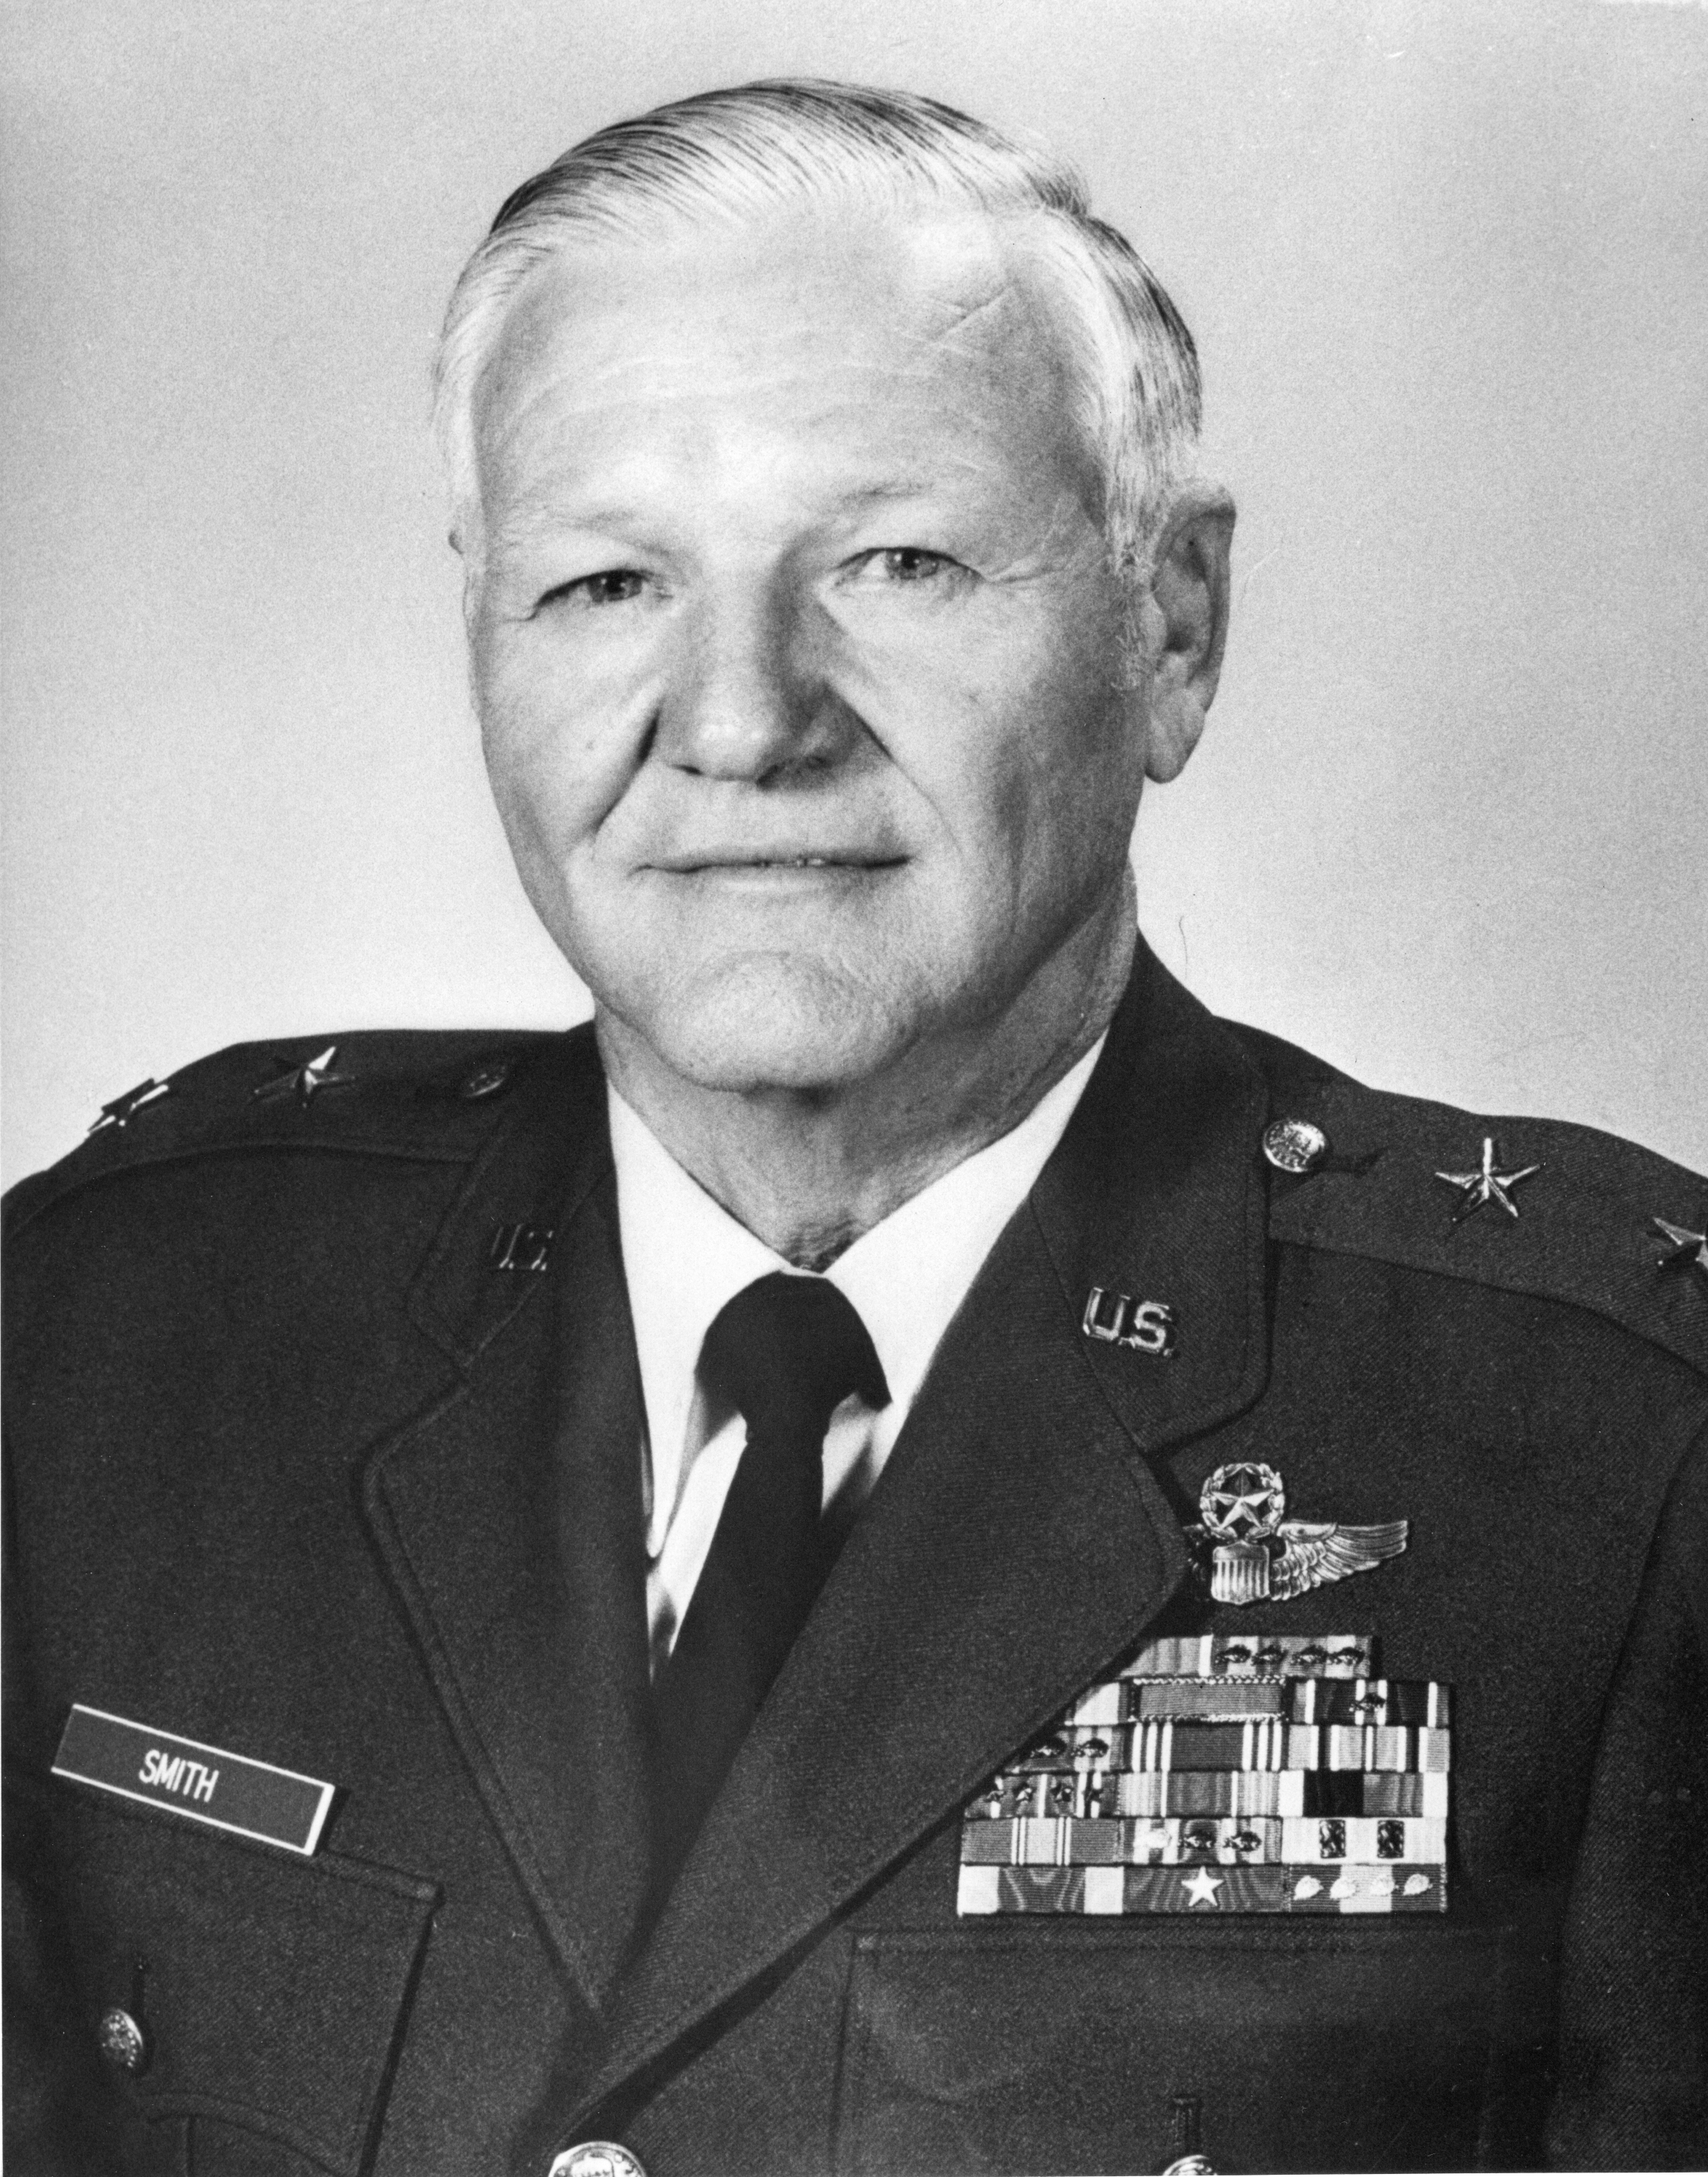 Major General James C. Smith